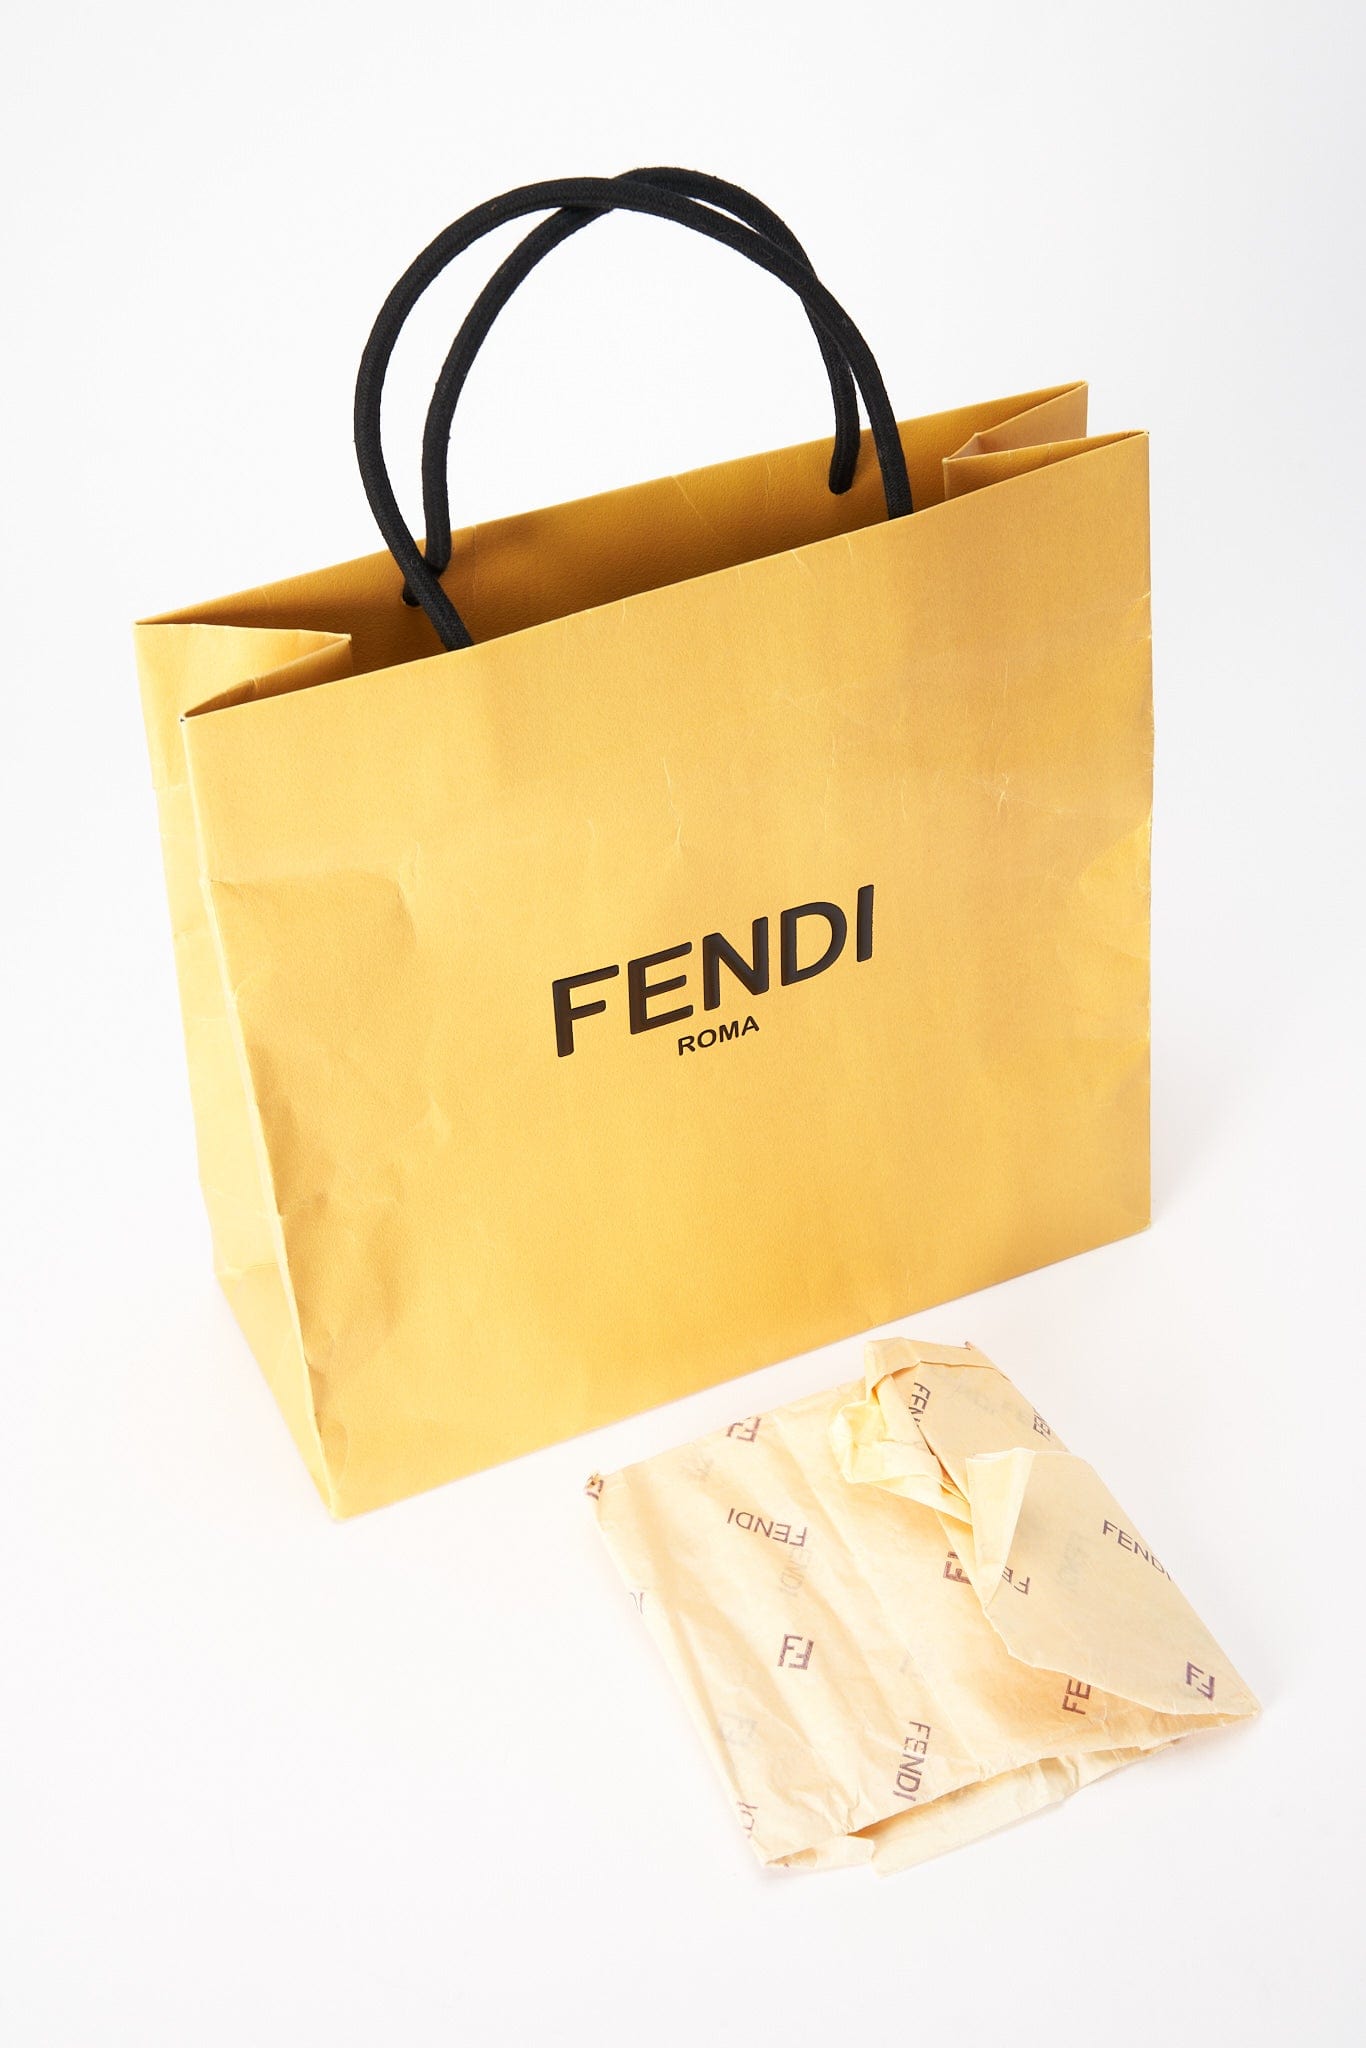 Fendi Gialla Yellow Beaded Baguette Bag – The Hosta